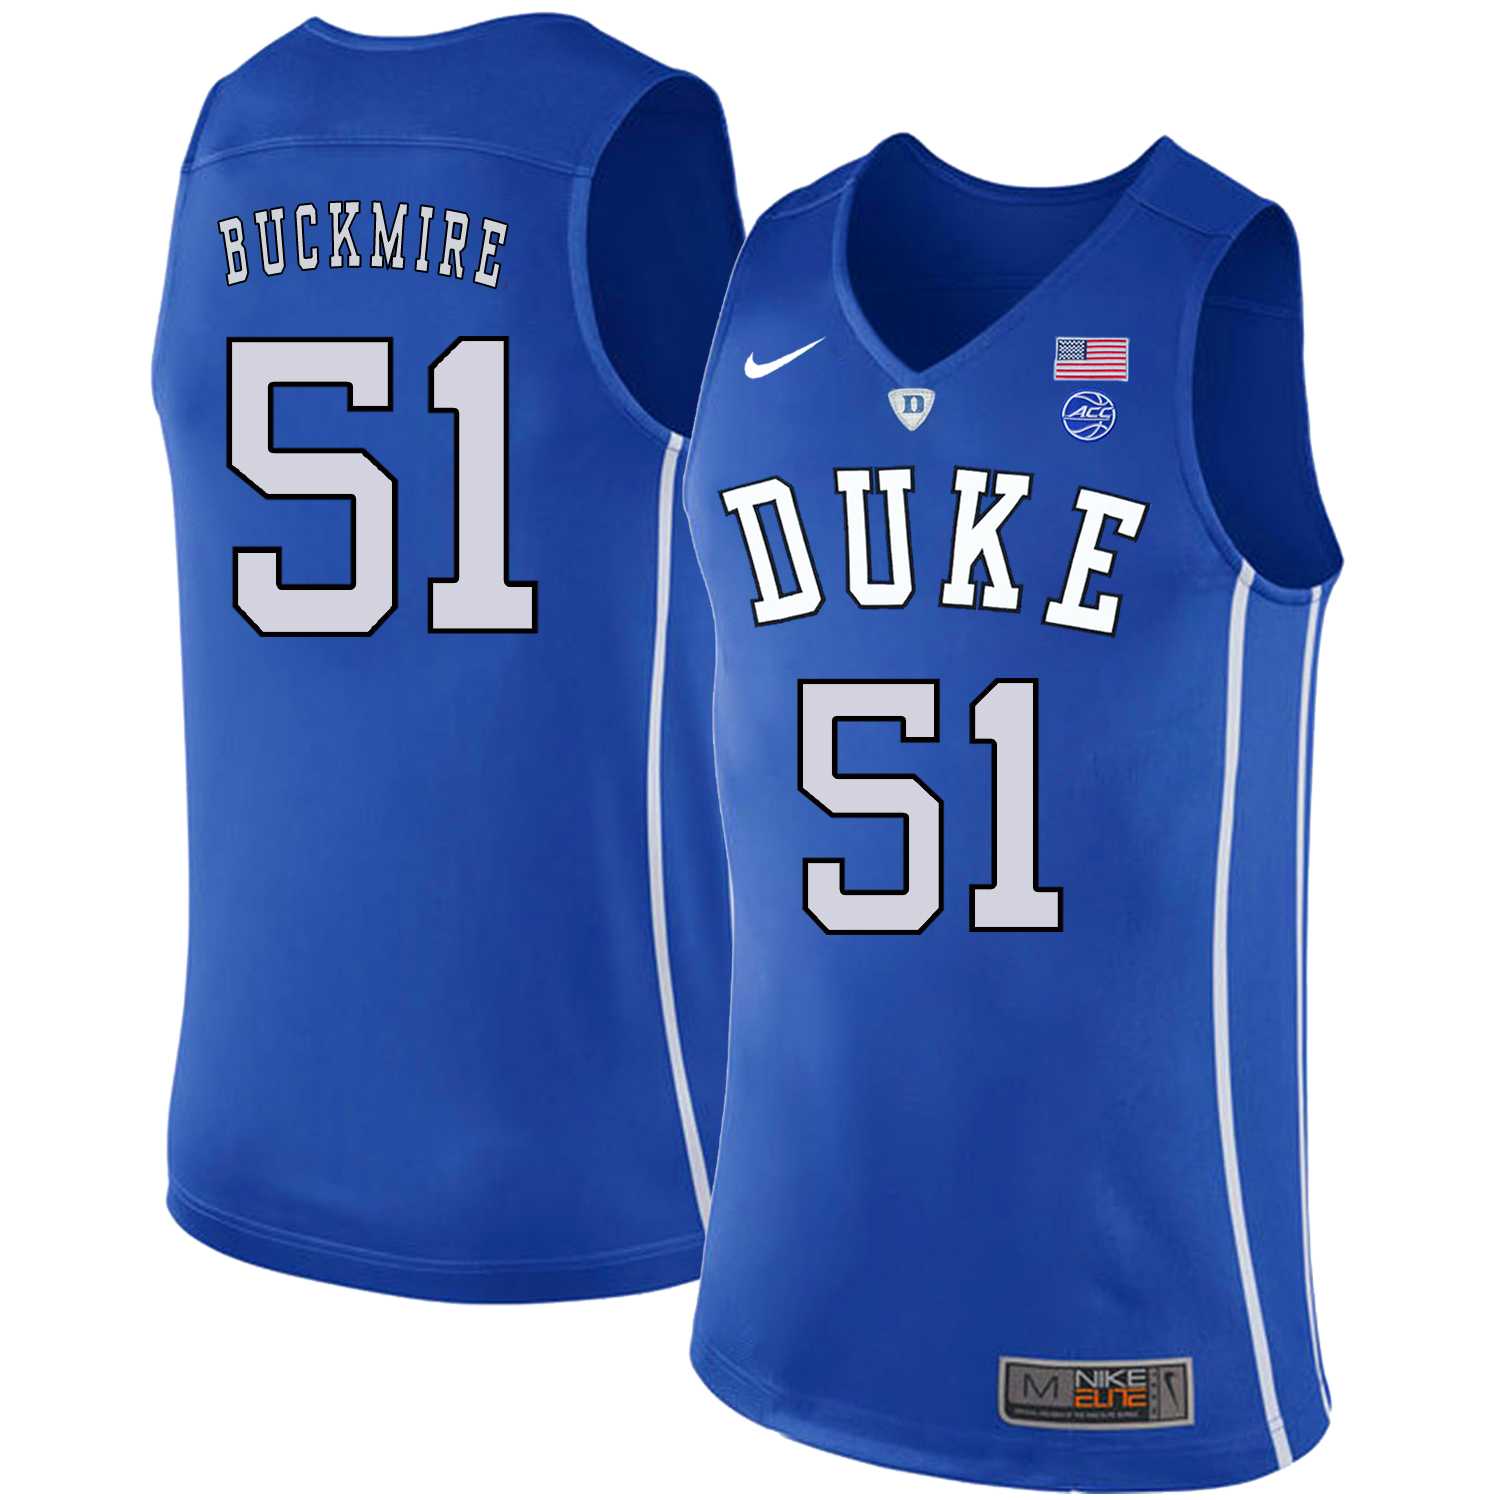 Duke Blue Devils 51 Mike Buckmire Blue Nike College Basketball Jersey Dzhi